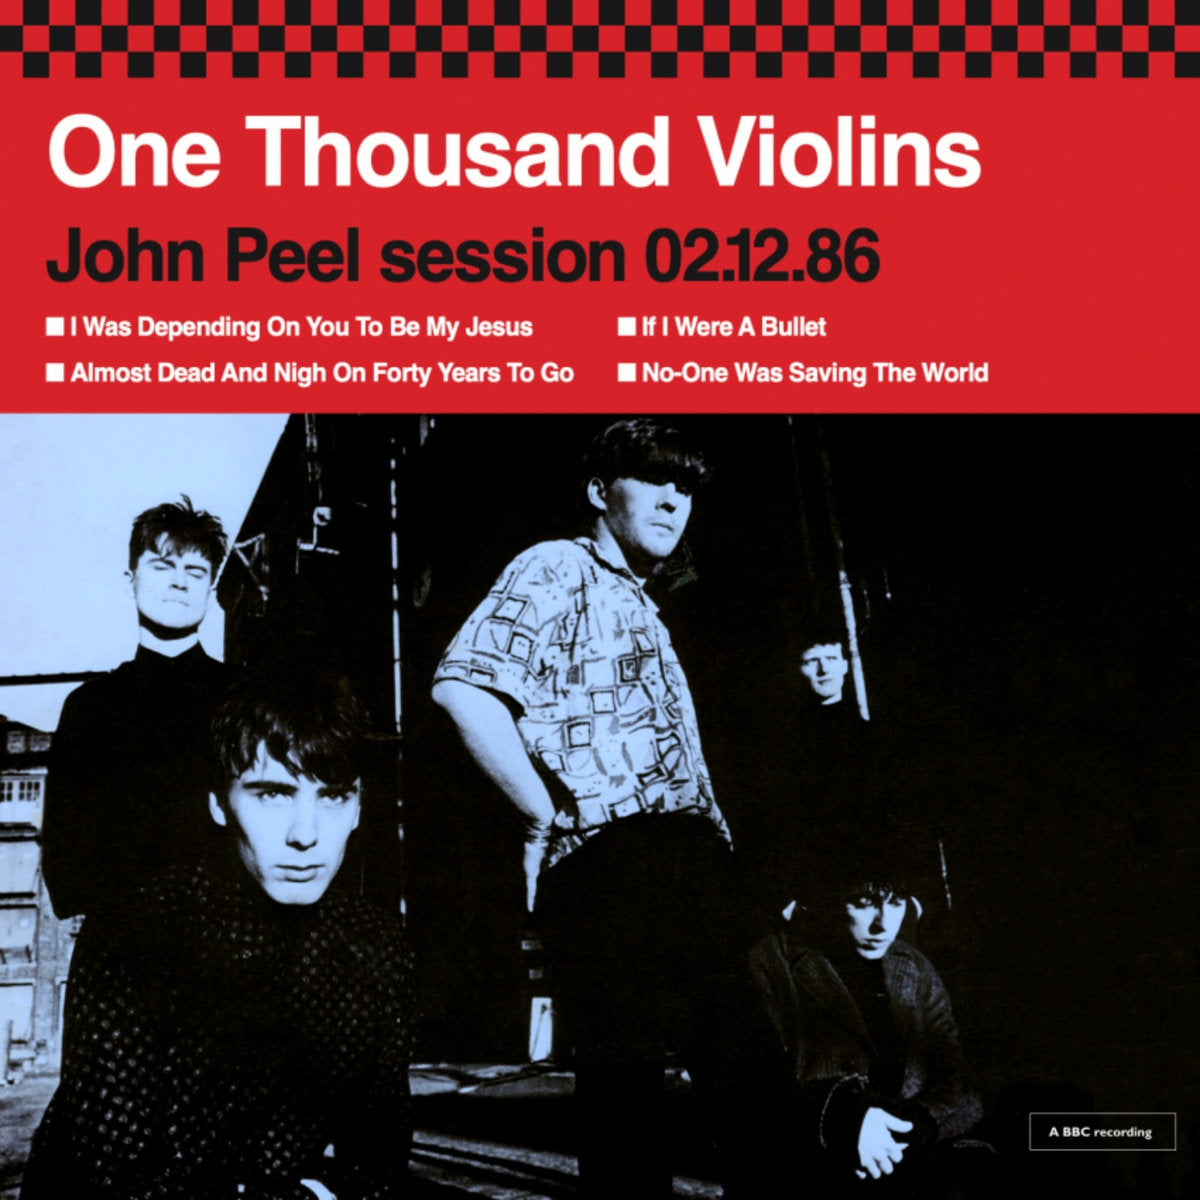 One Thousand Violins - John Peel Session 02.12.86 (Precious) 10"